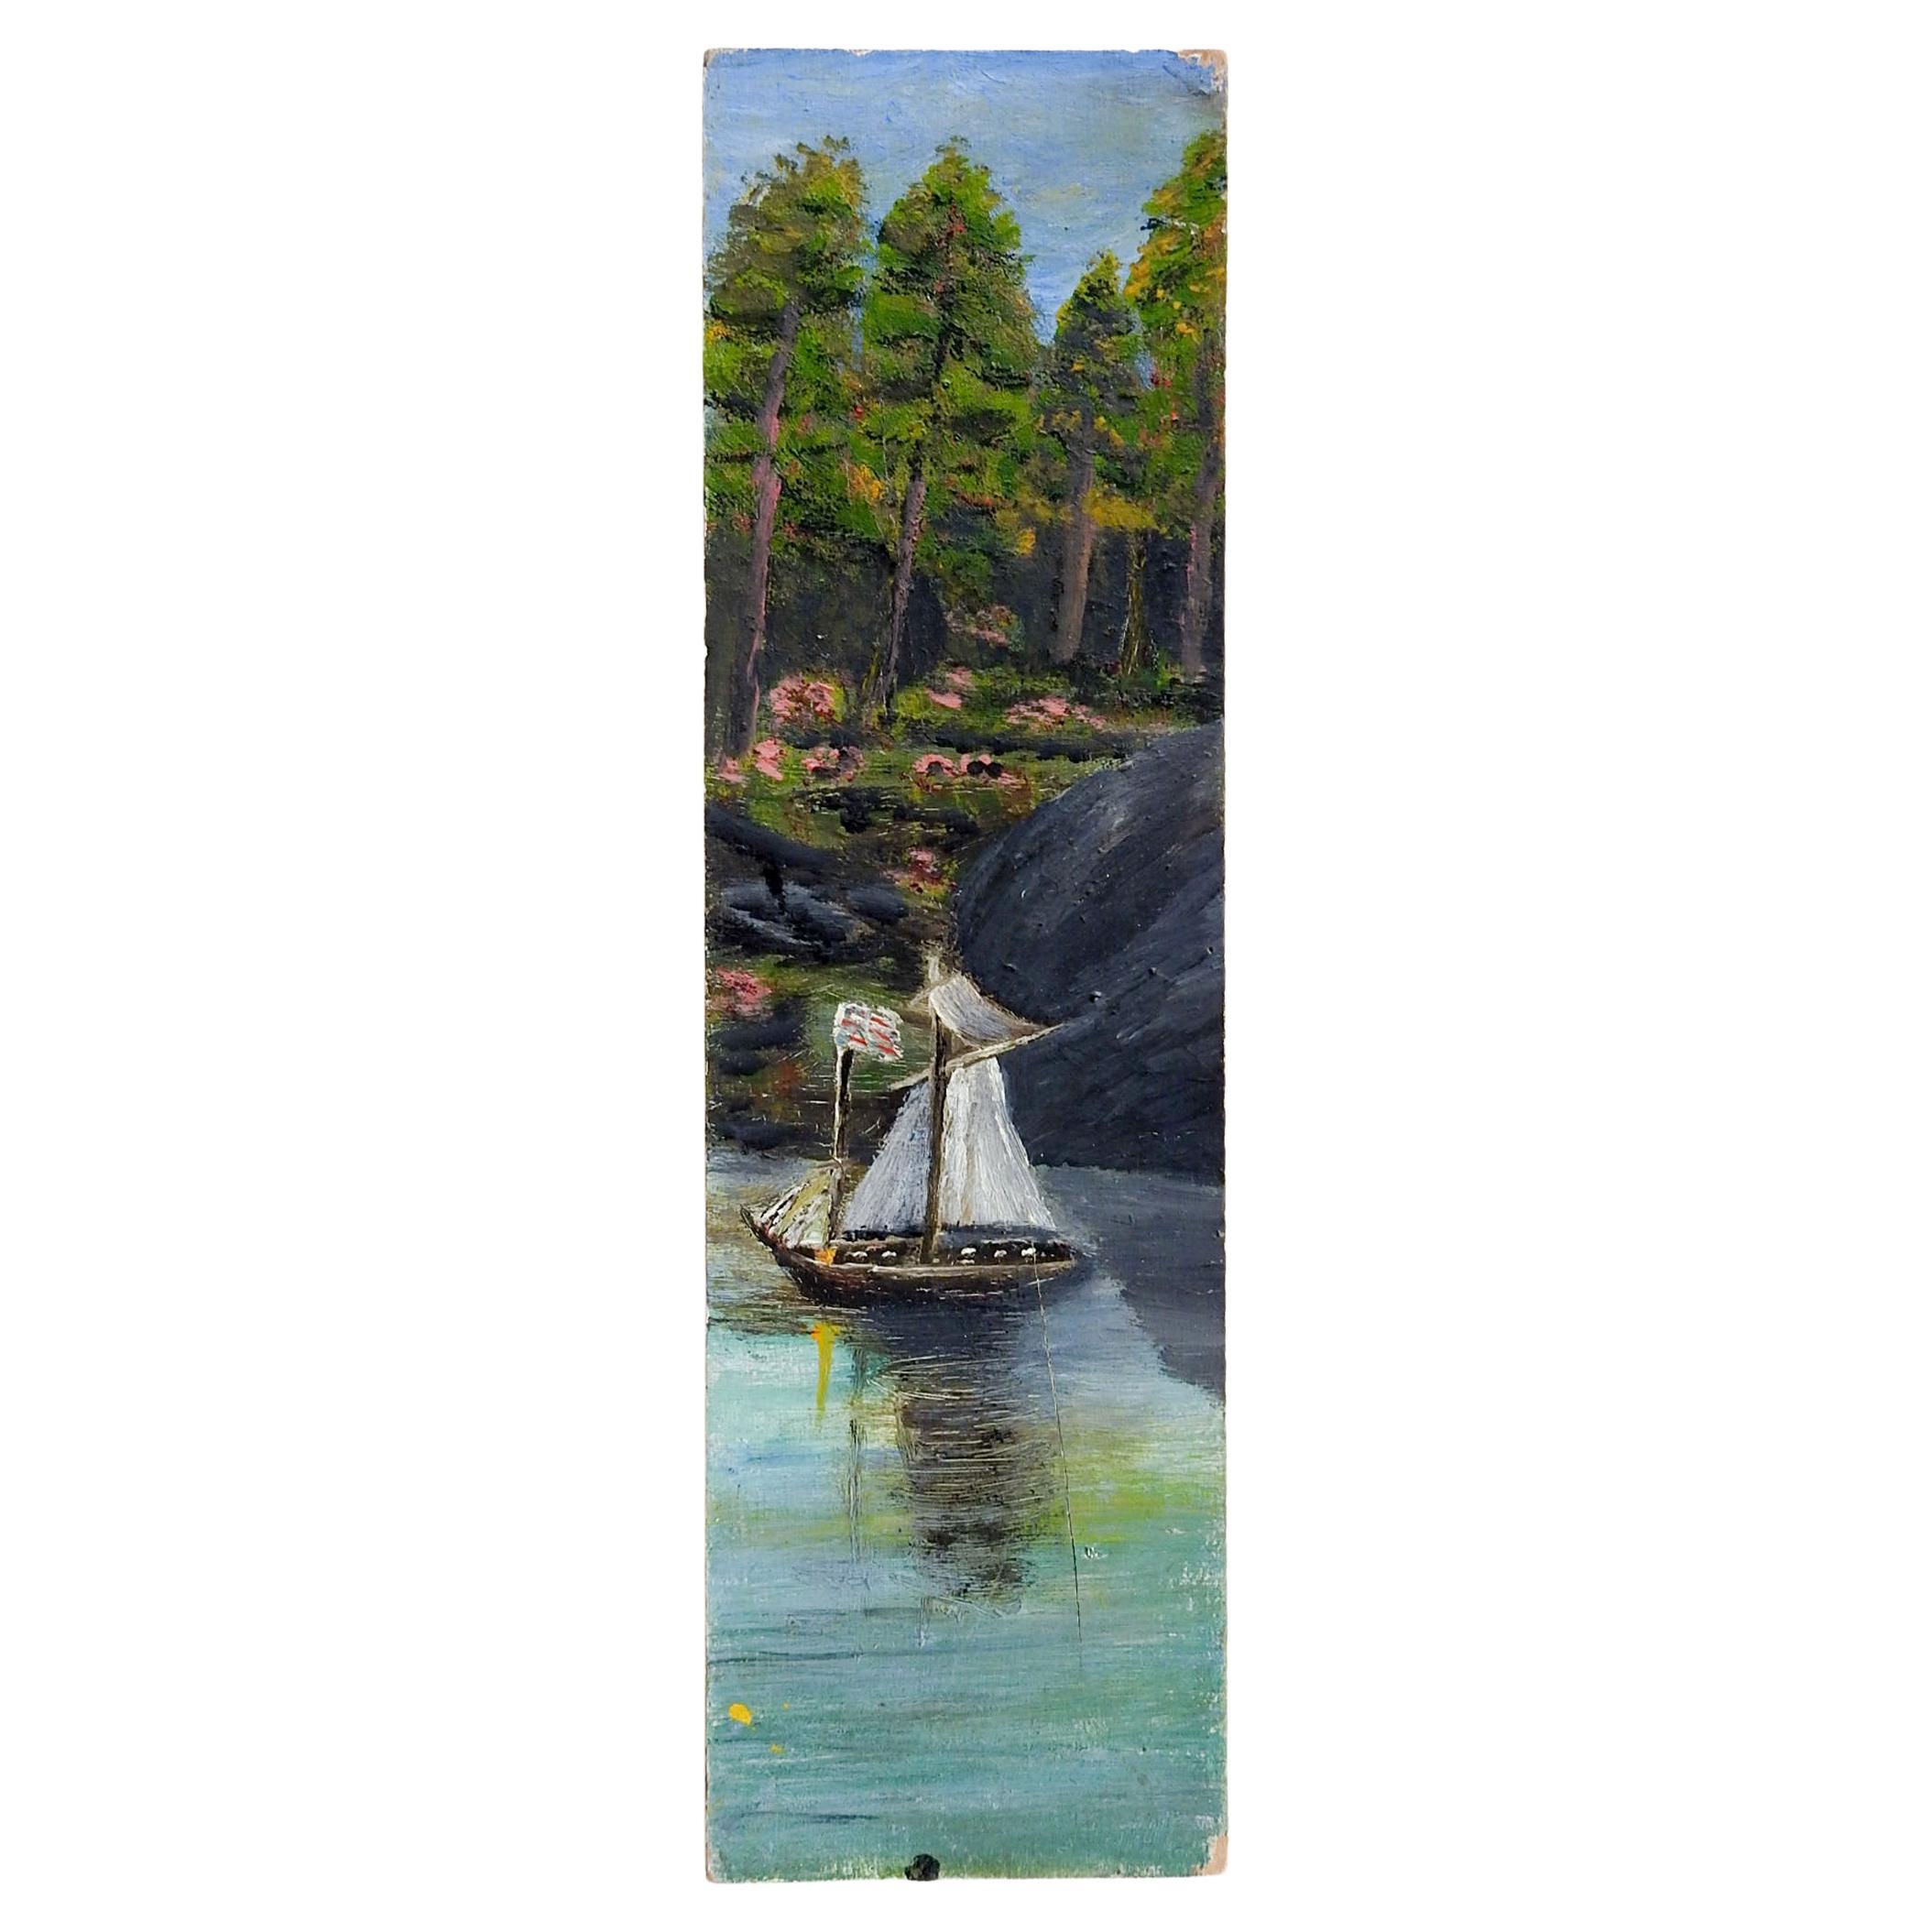 Langformatiges Vintage-Gemälde, Volkskunstschiff auf Fluss, Landschaft